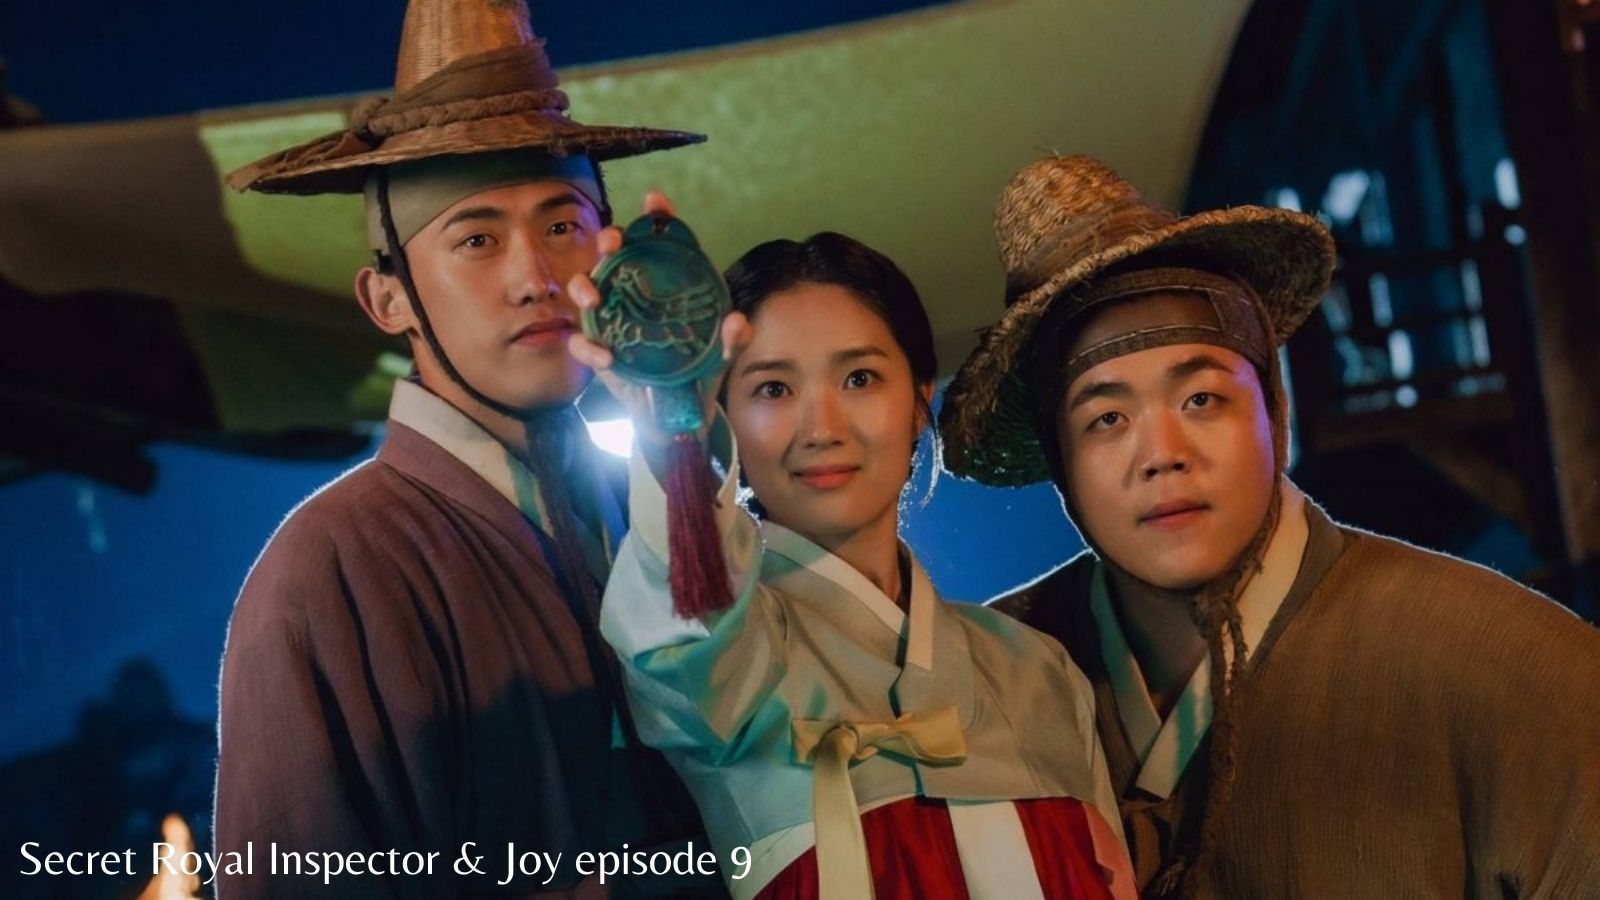 Secert Royal Inspector & Joy episode 9 release date